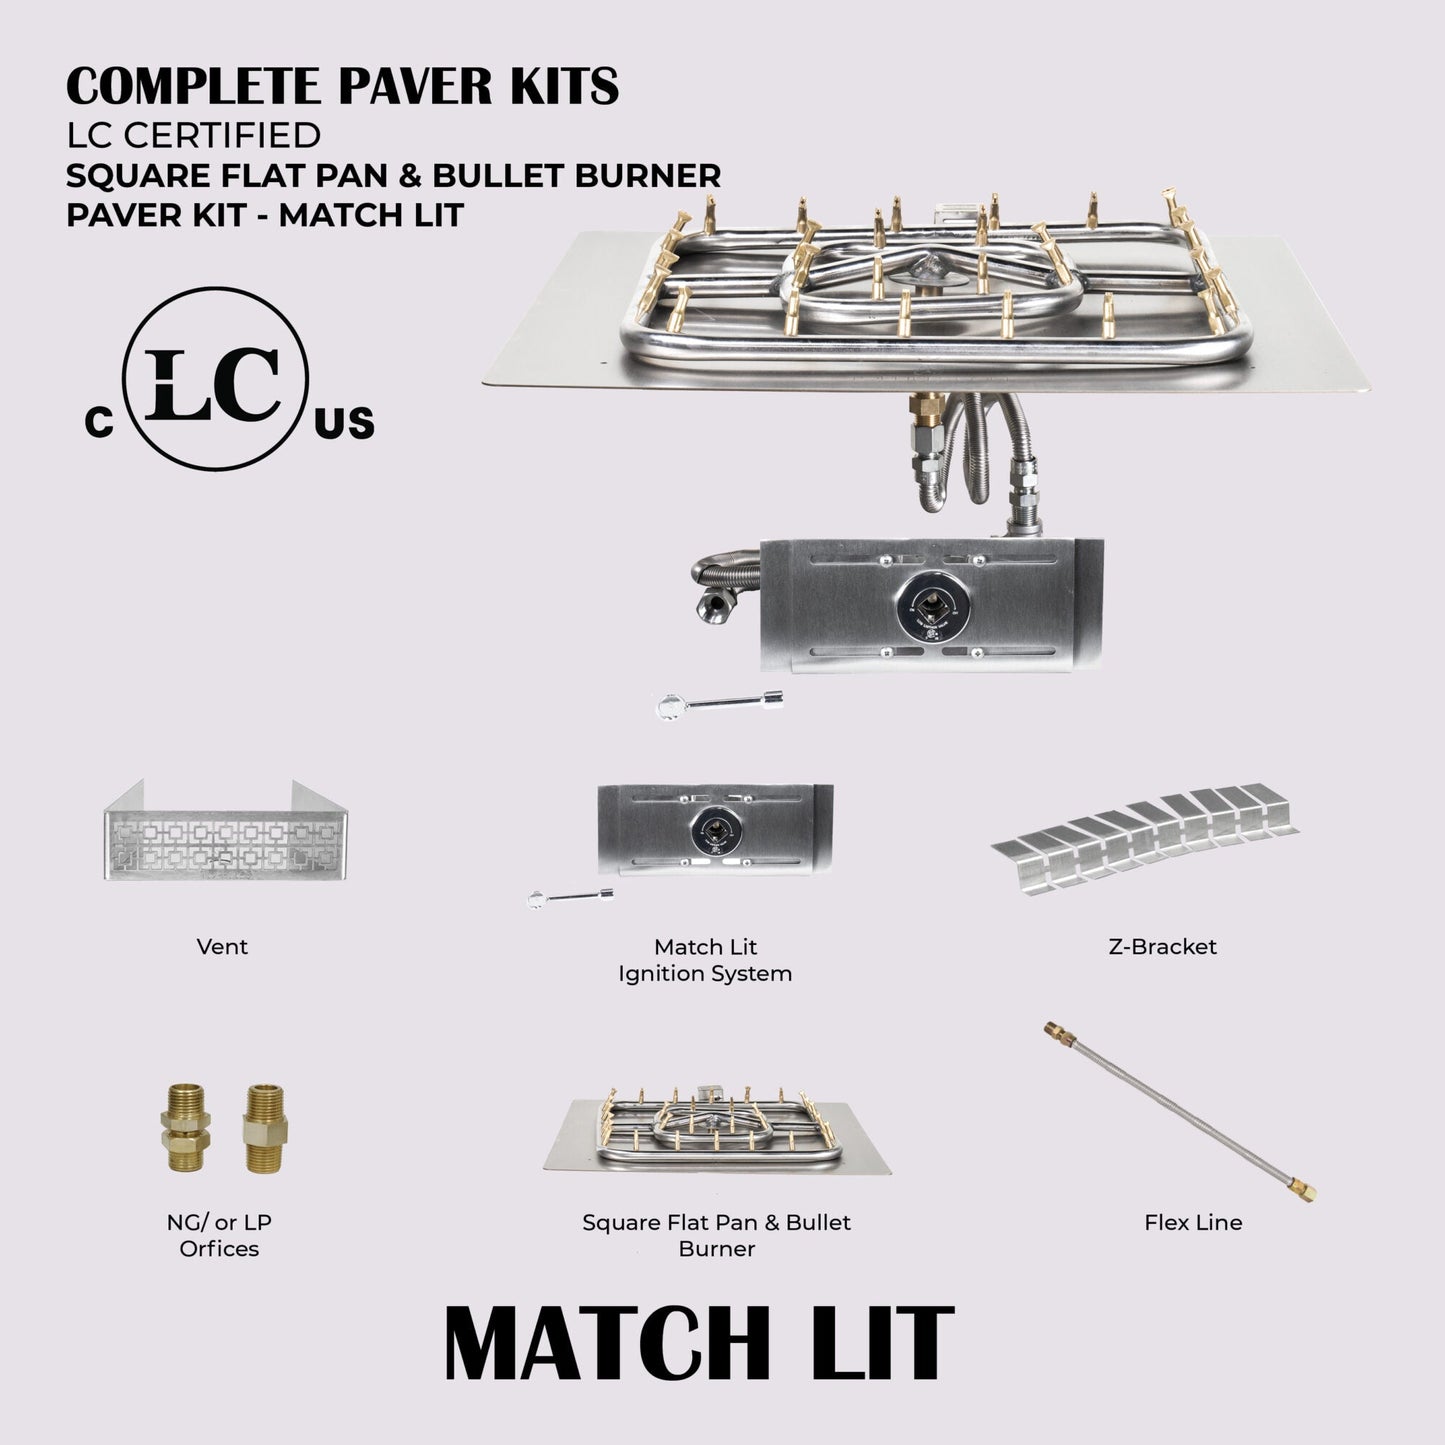 Square Flat Pan & Square Bullet Burner Paver Kit - Match Lit Ignition